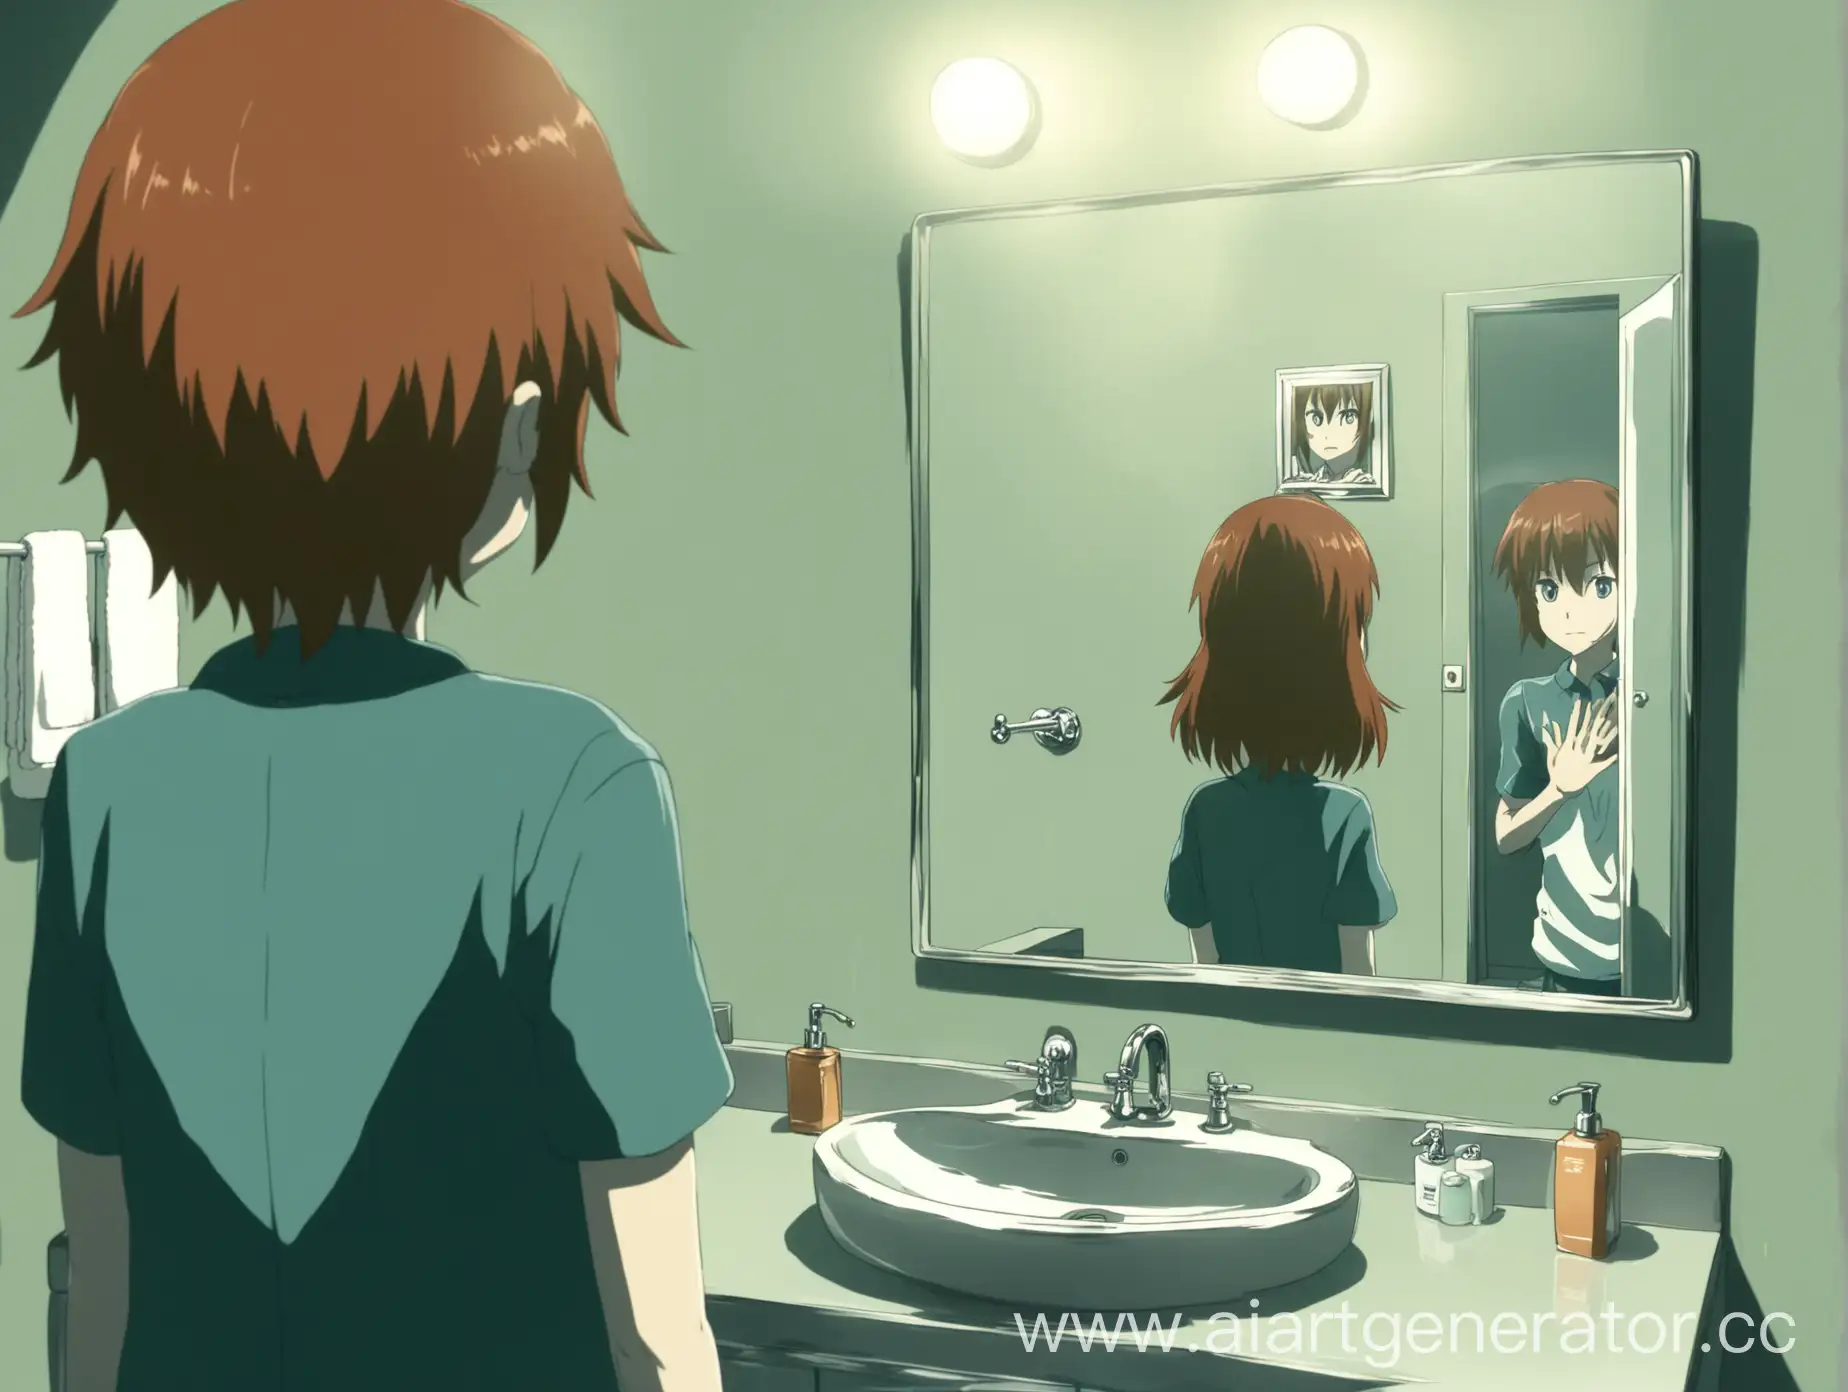 отражение в зеркале, раковина в ванне, аниме стиль, отражение человека в зеркале, вид от лица человека